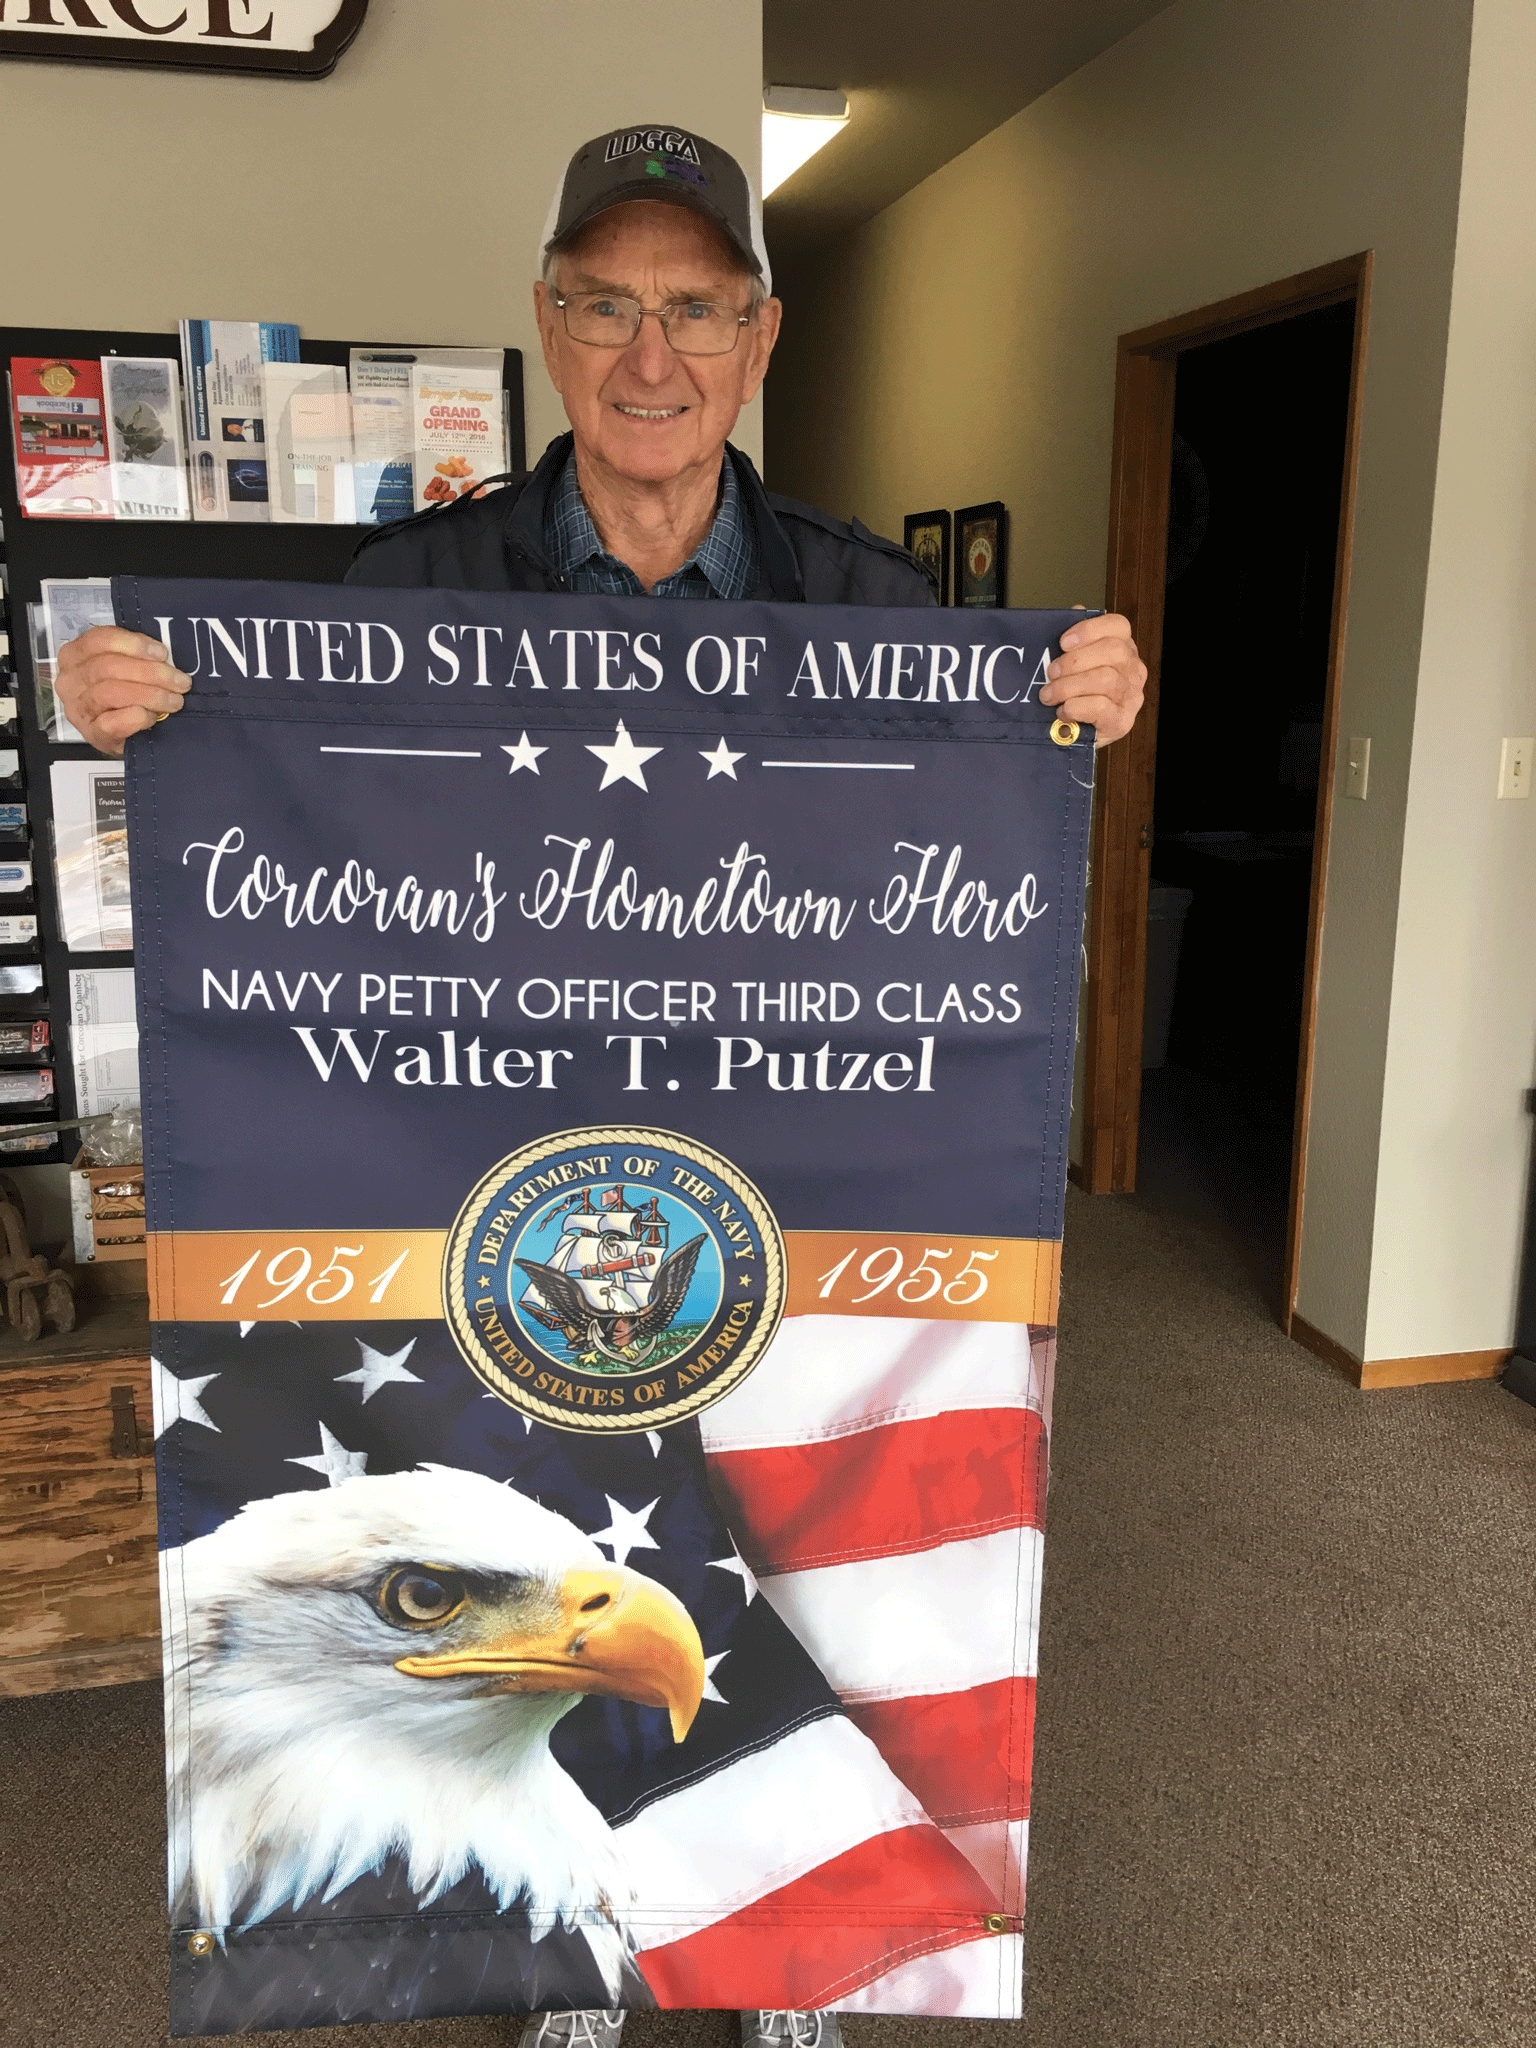 Military banners honor veterans